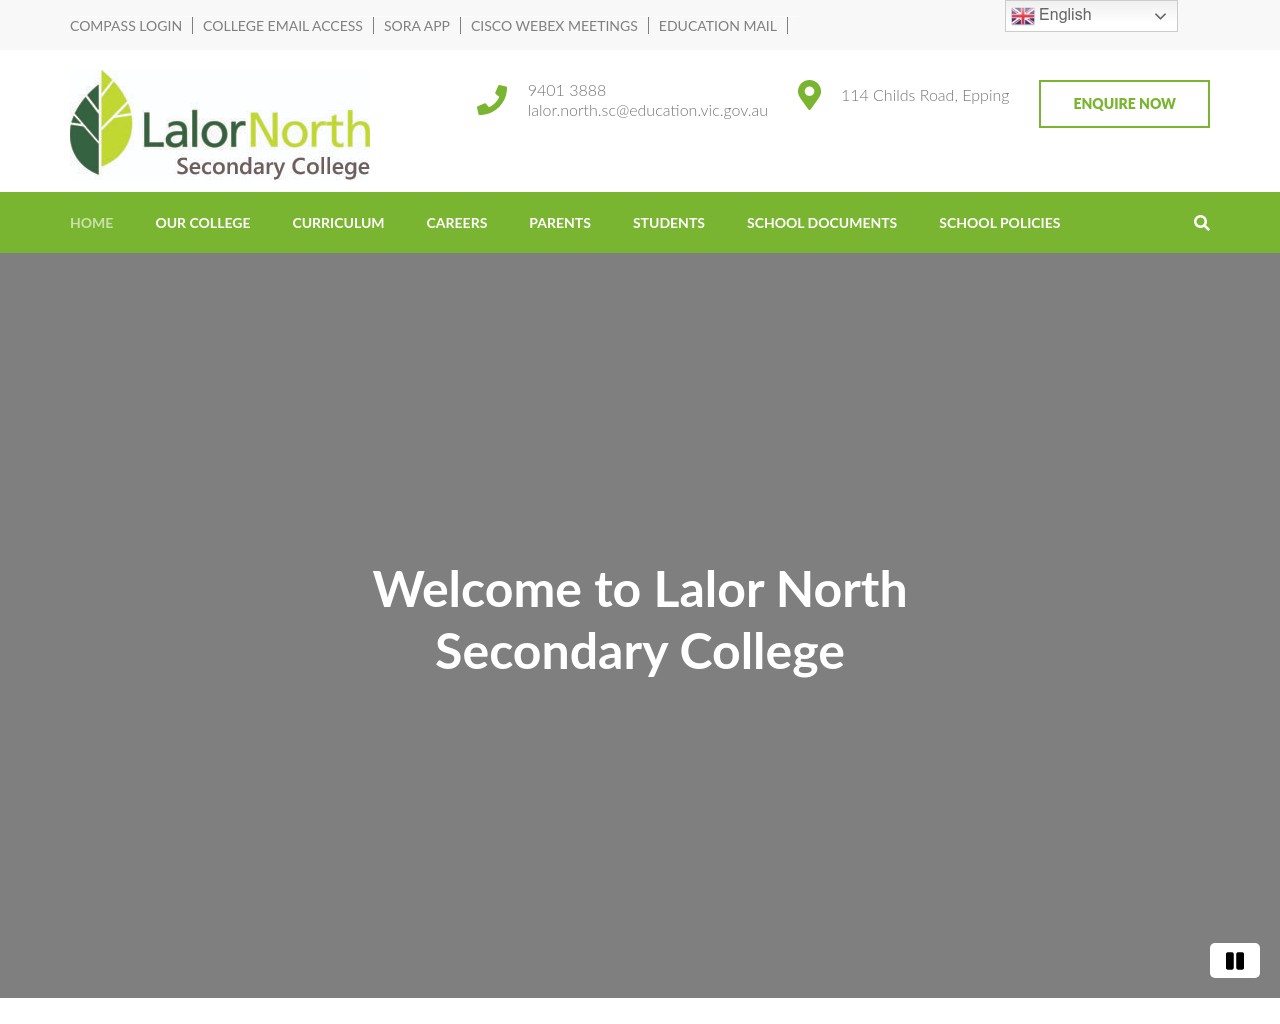 Lalor North Secondary College